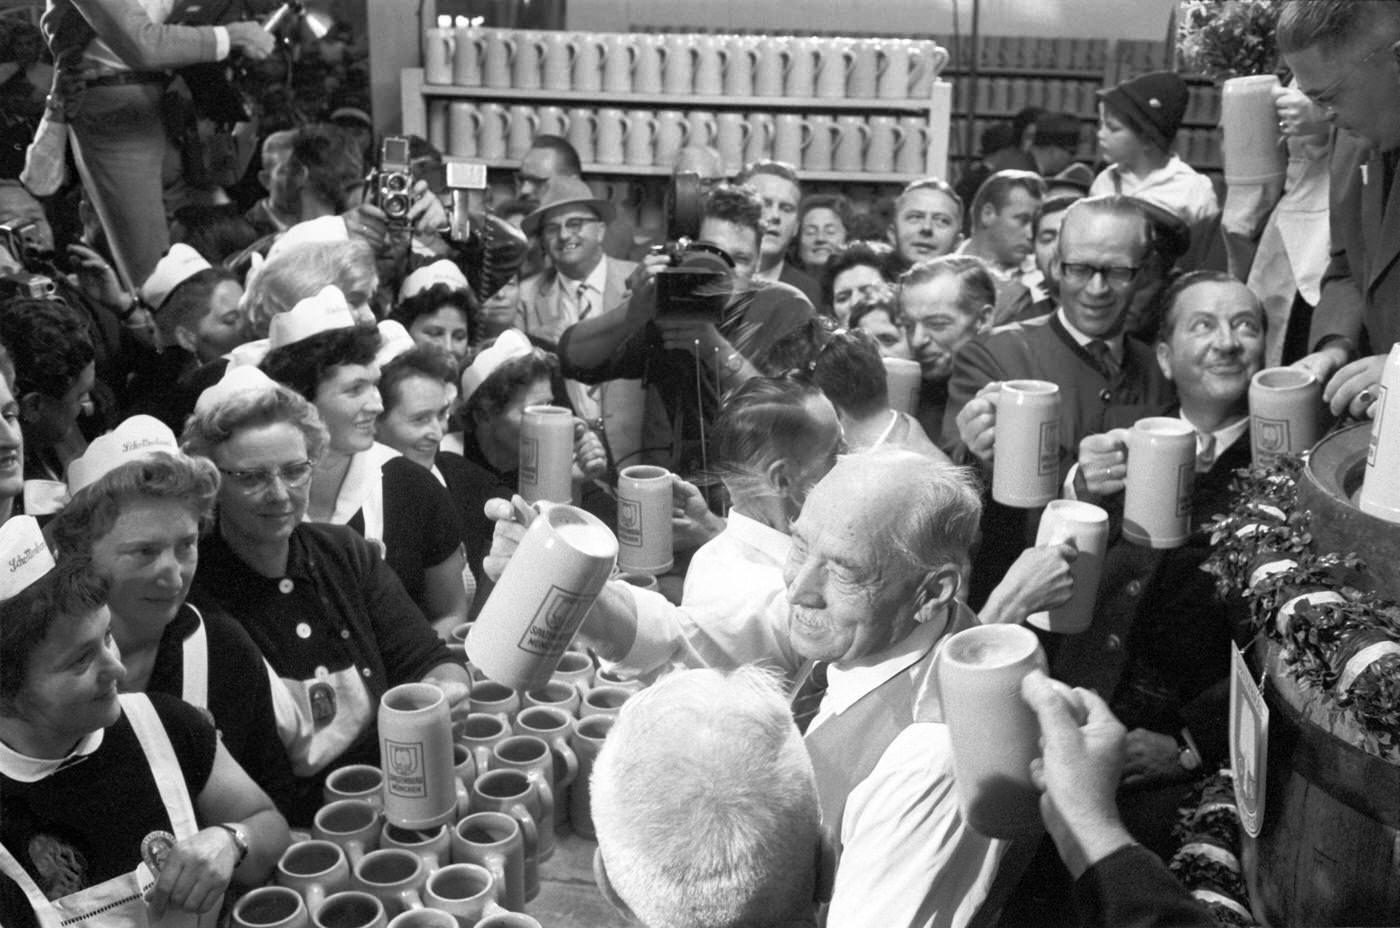 Mayor Thomas Wimmer taps first barrel at Oktoberfest, 1963.